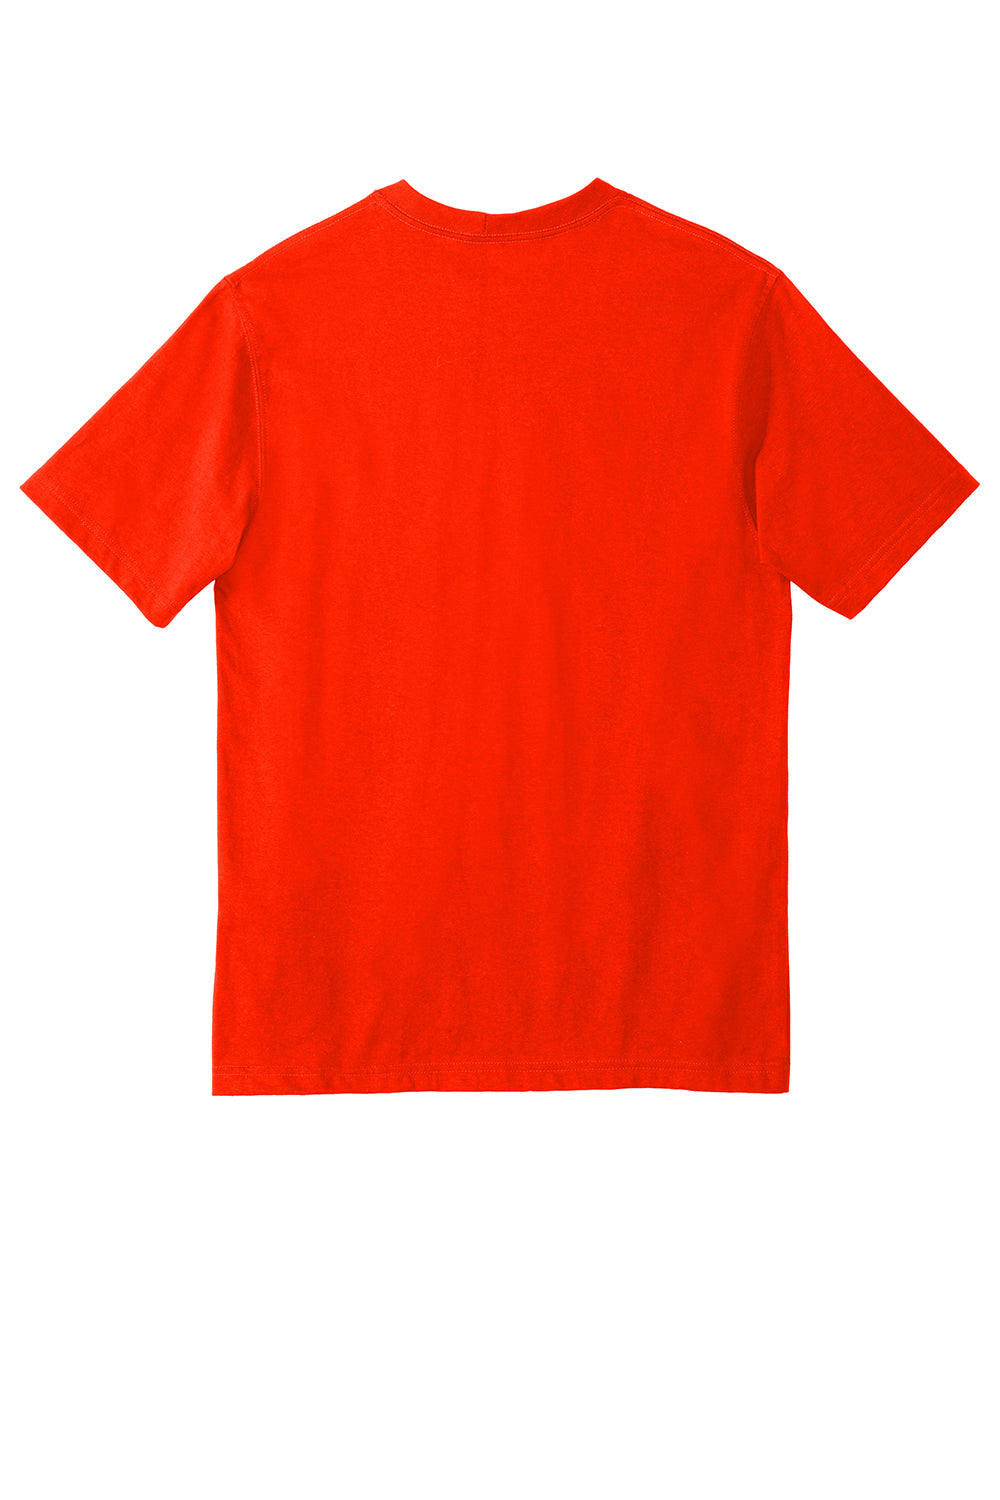 Carhartt CTK87/CTTK87 Mens Workwear Short Sleeve Crewneck T-Shirt w/ Pocket Brite Orange Flat Back